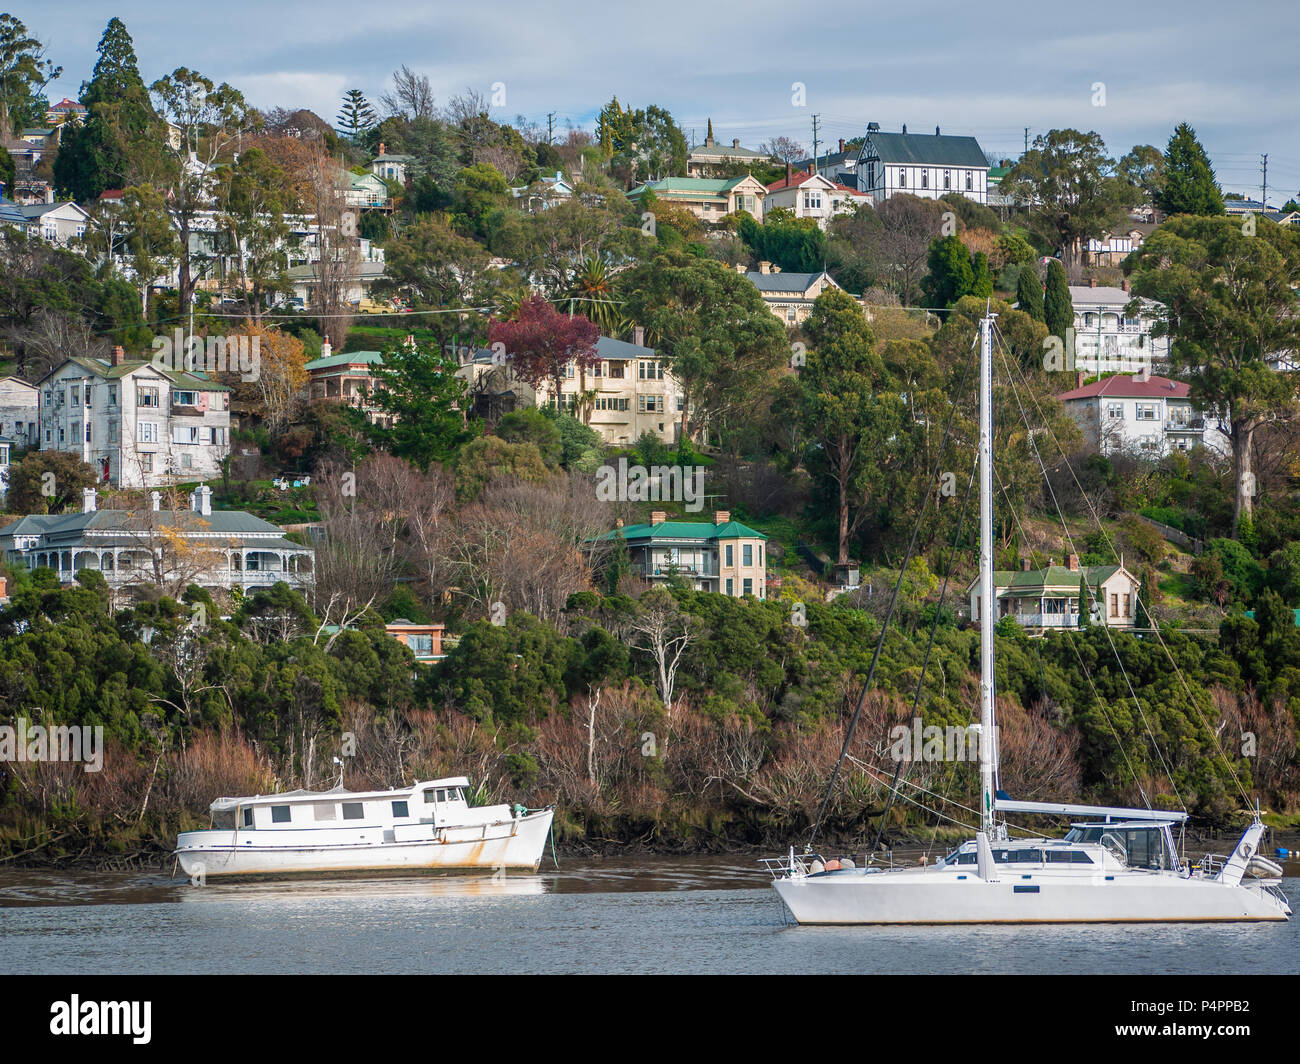 View from Royal Park of residential houses near Tamar River in Launceston. Tasmania, Australia Stock Photo